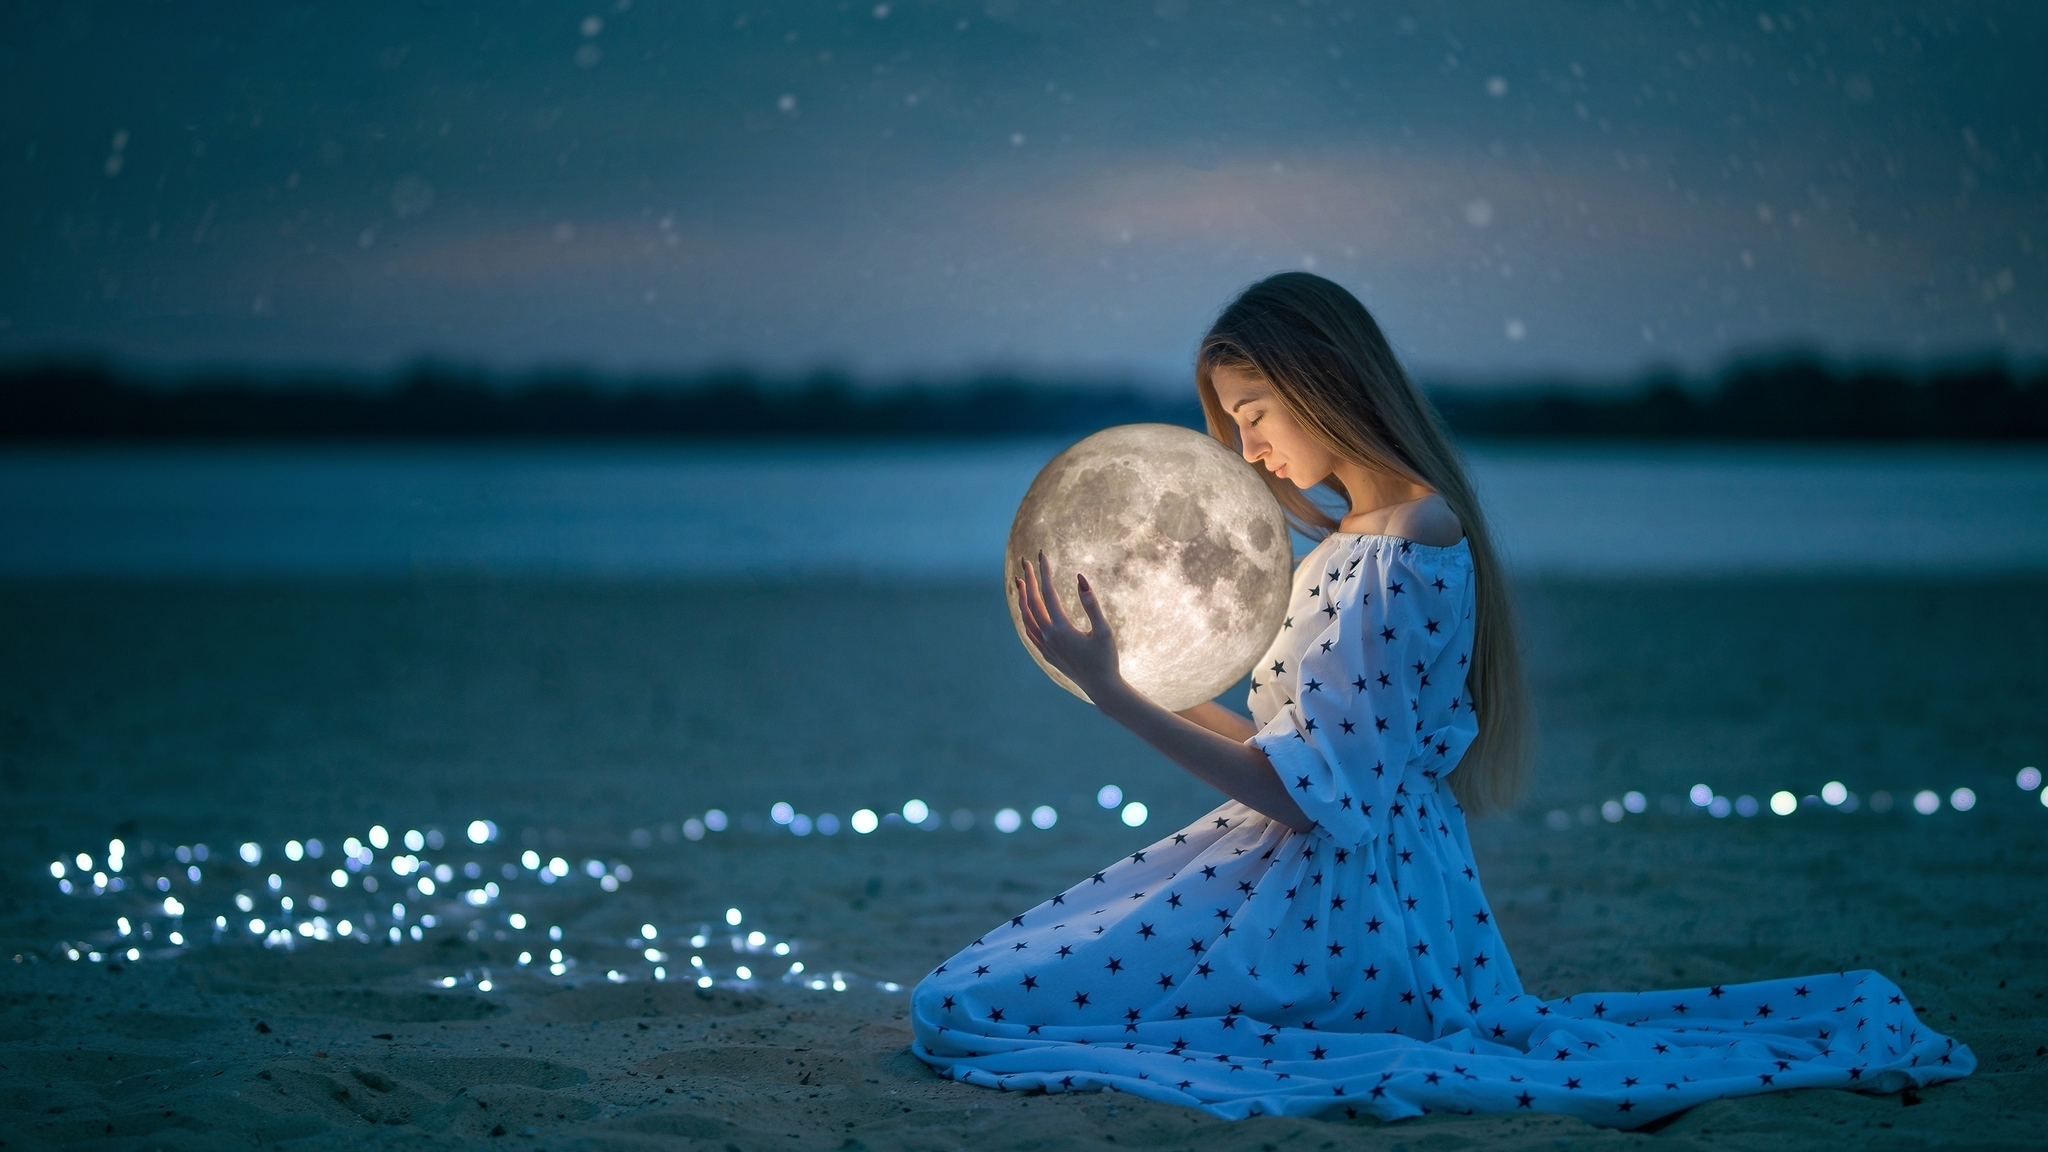 Image: Girl, dress, sitting, sand, globe, sphere, planet, moon, lights, keeps